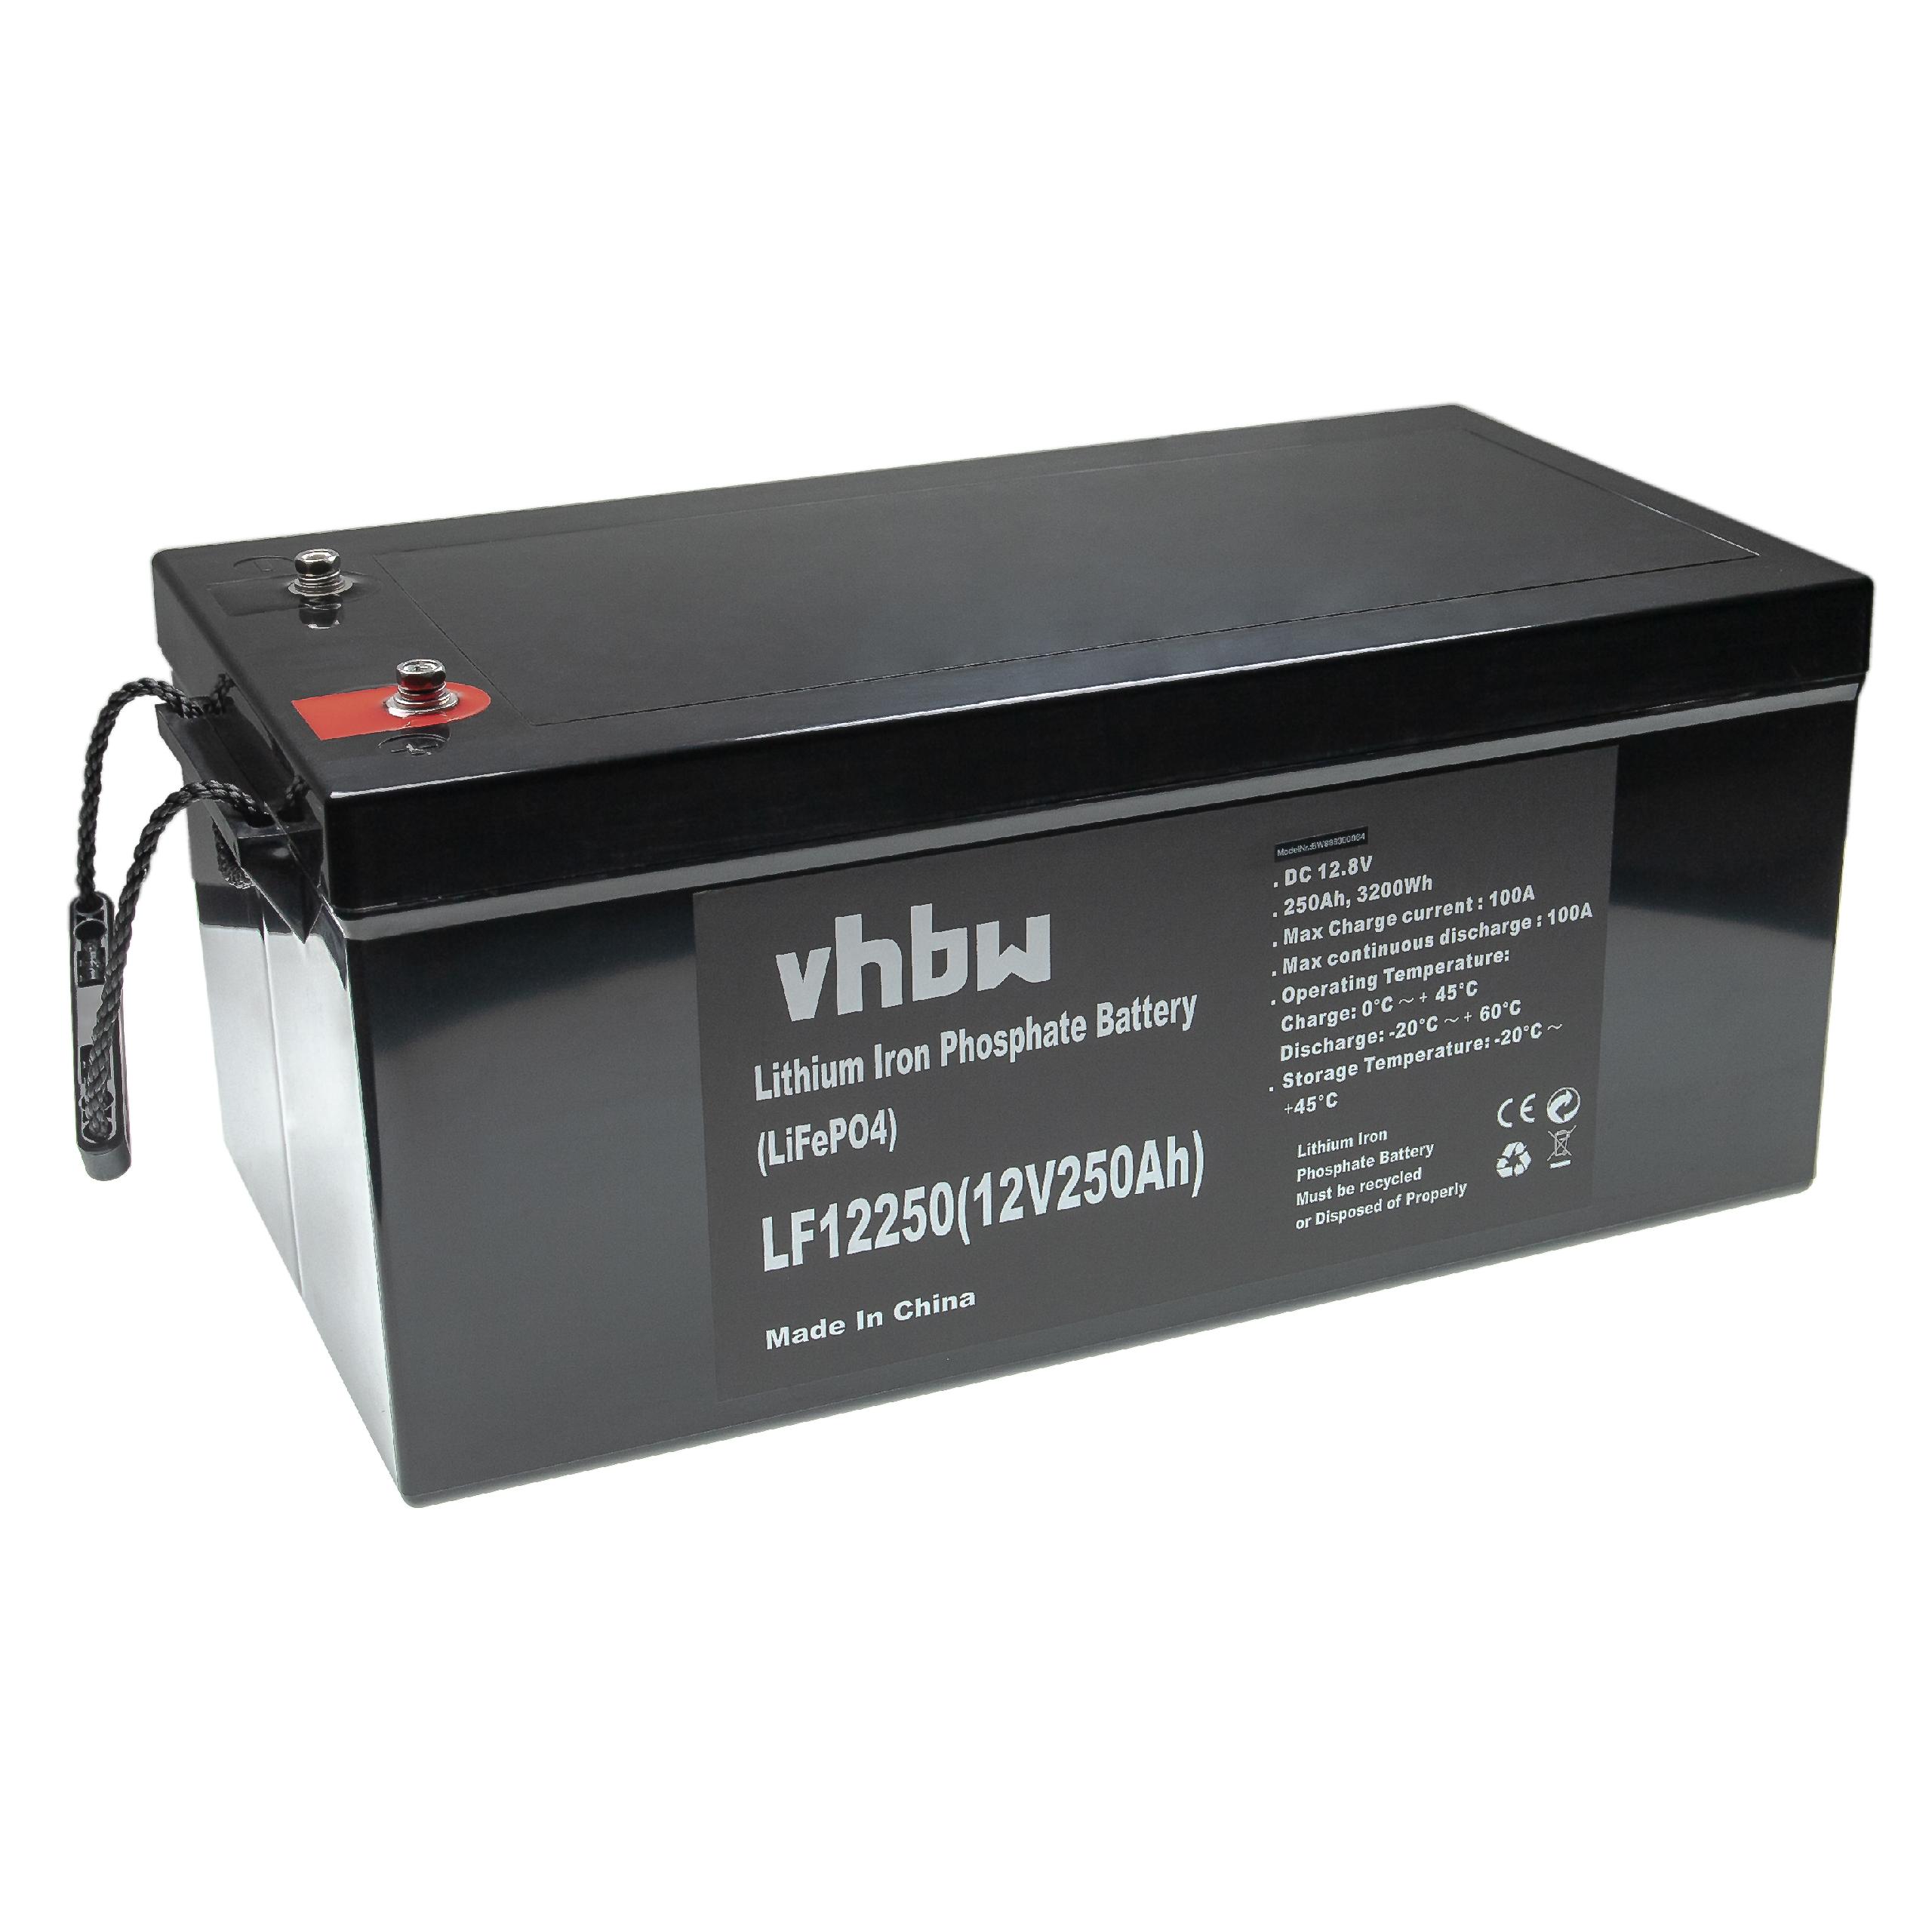 Bordbatterie Akku passend für Wohnmobil, Boot, Solaranlage - 250 Ah 12,8V LiFePO4, 250000mAh, ohne Farbe / Int